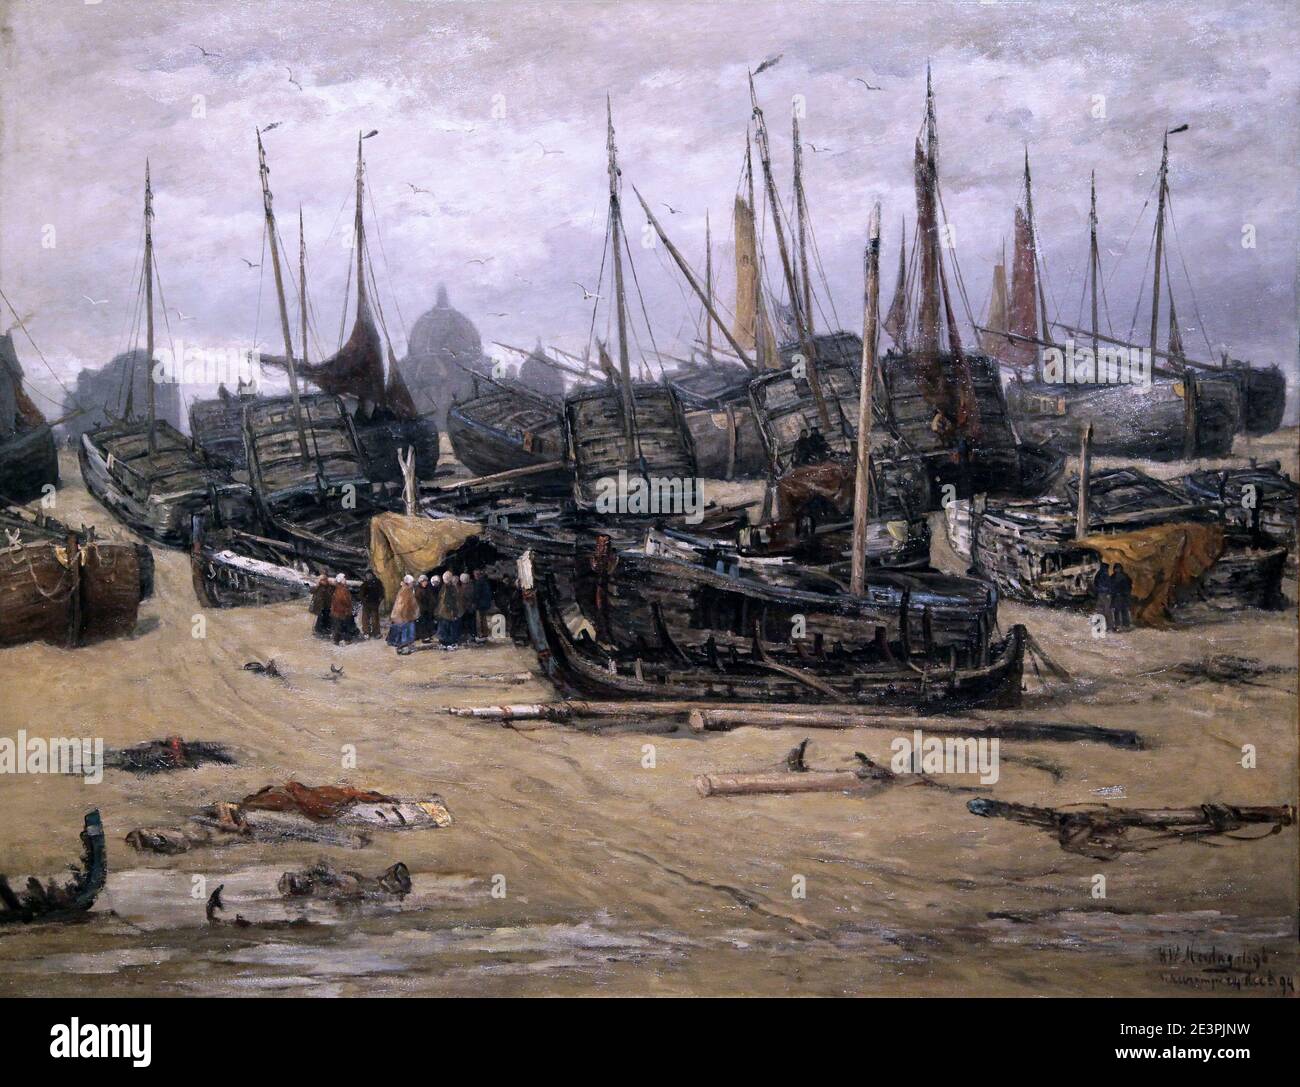 After the Storm 1894/1896 by Hendrick Willem Mesdag (1831-1915) Dutch marine painter( Panorama Mesdag Scheveningen ) Stock Photo